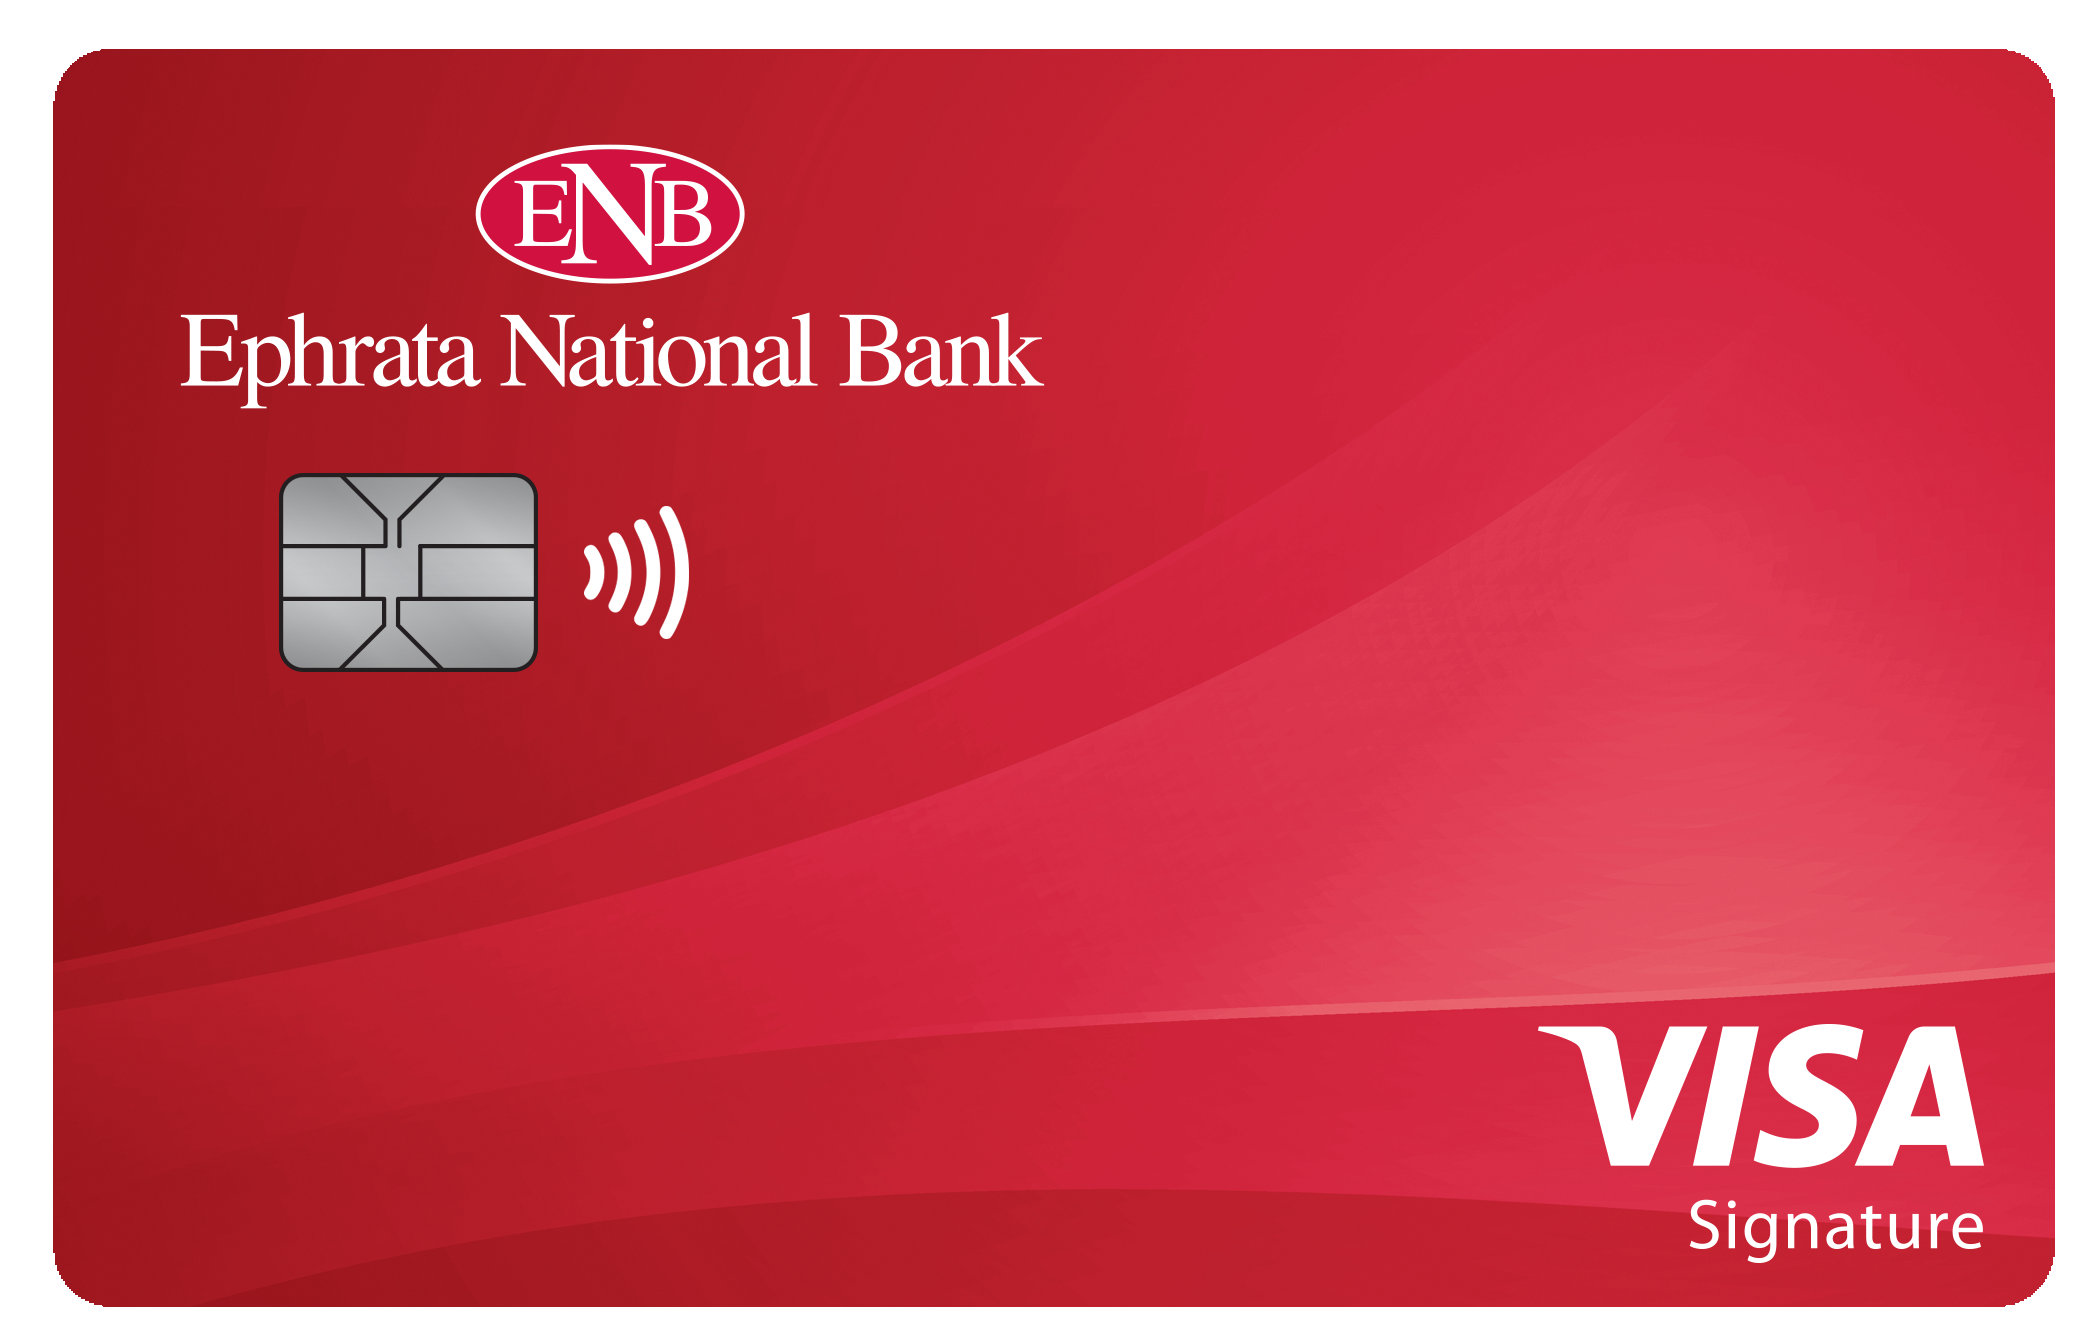 Ephrata National Bank Travel Rewards+ Card